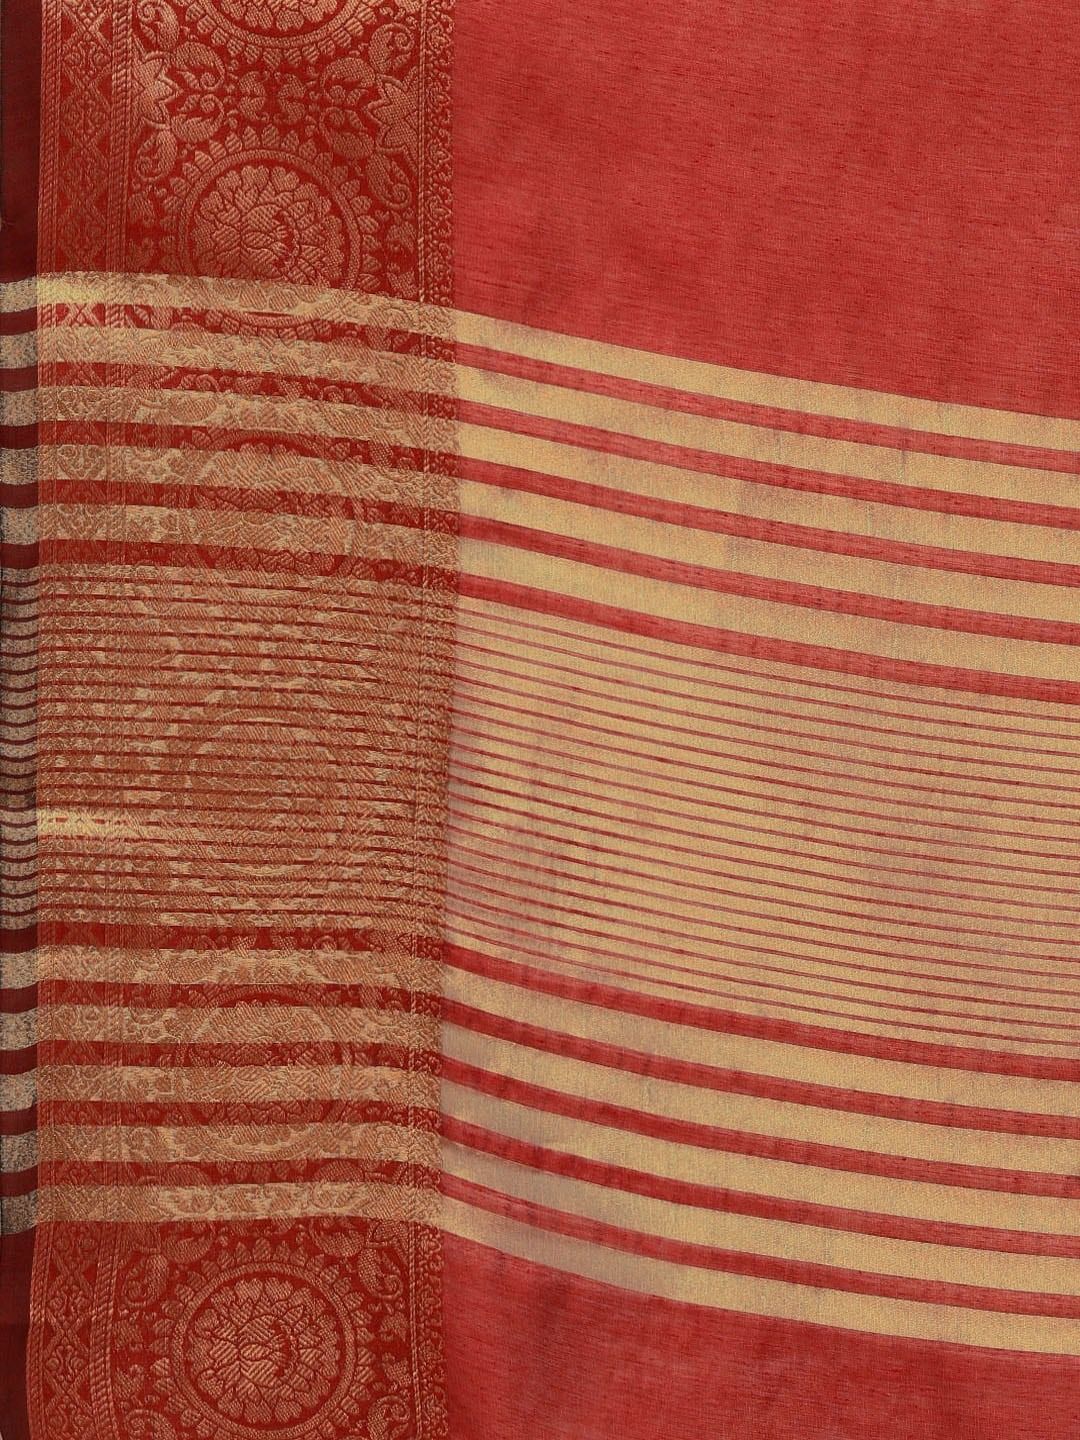 Leeza Store Women's Cotton Silk Golden Zari Border Jacquard Woven Plain Solid Saree with Unstitched Blouse Piece - Red